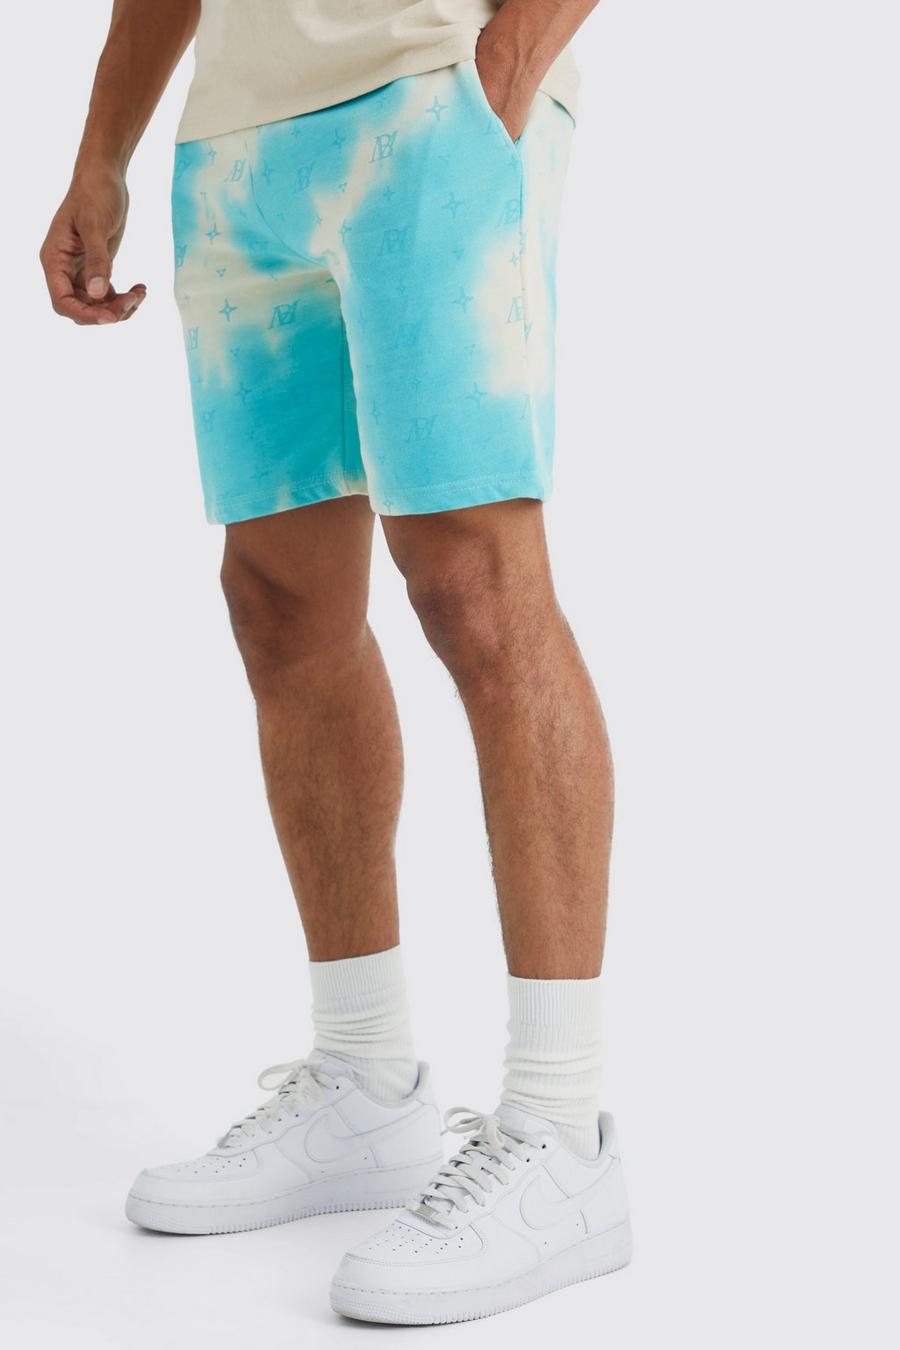 Aqua Baggy Tie Dye Shorts